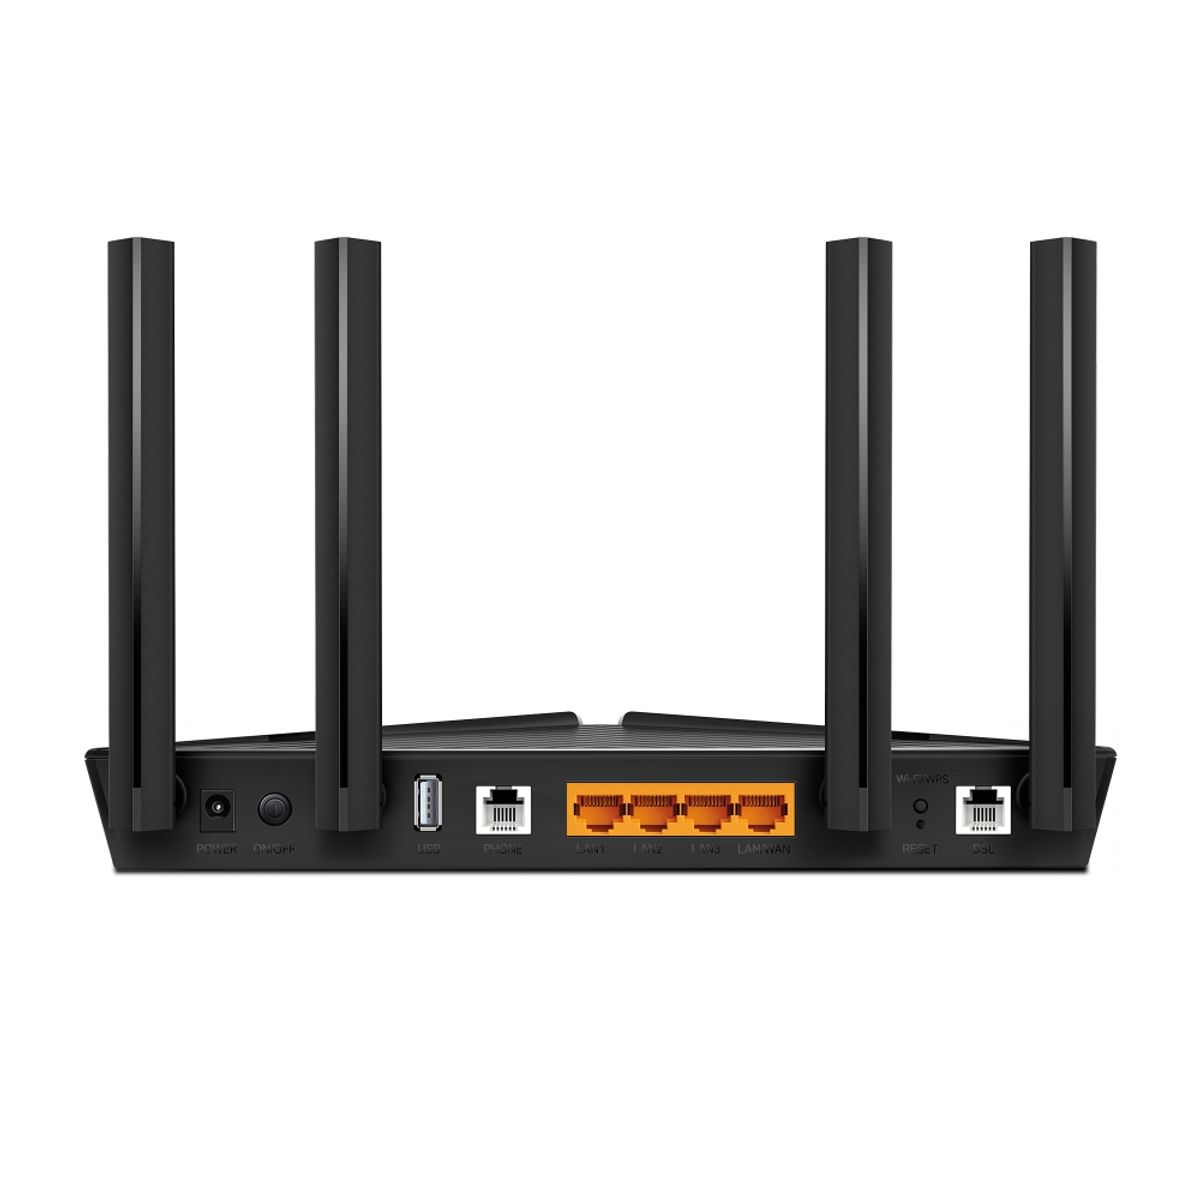 DualBand Wi-Fi 6 VDSL/ADSL Modem Router